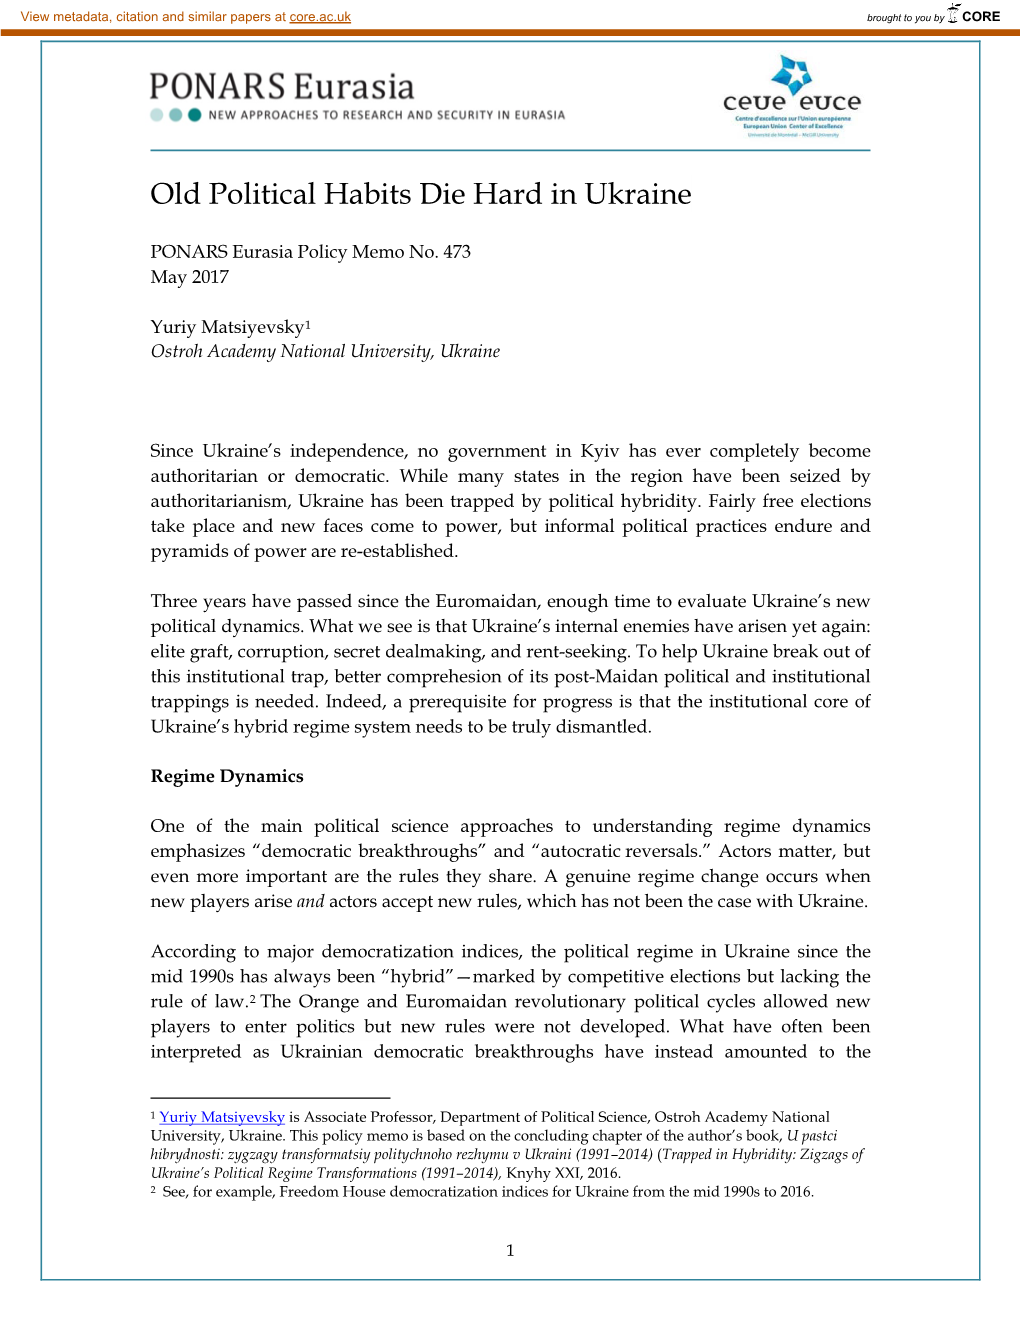 Old Political Habits Die Hard in Ukraine